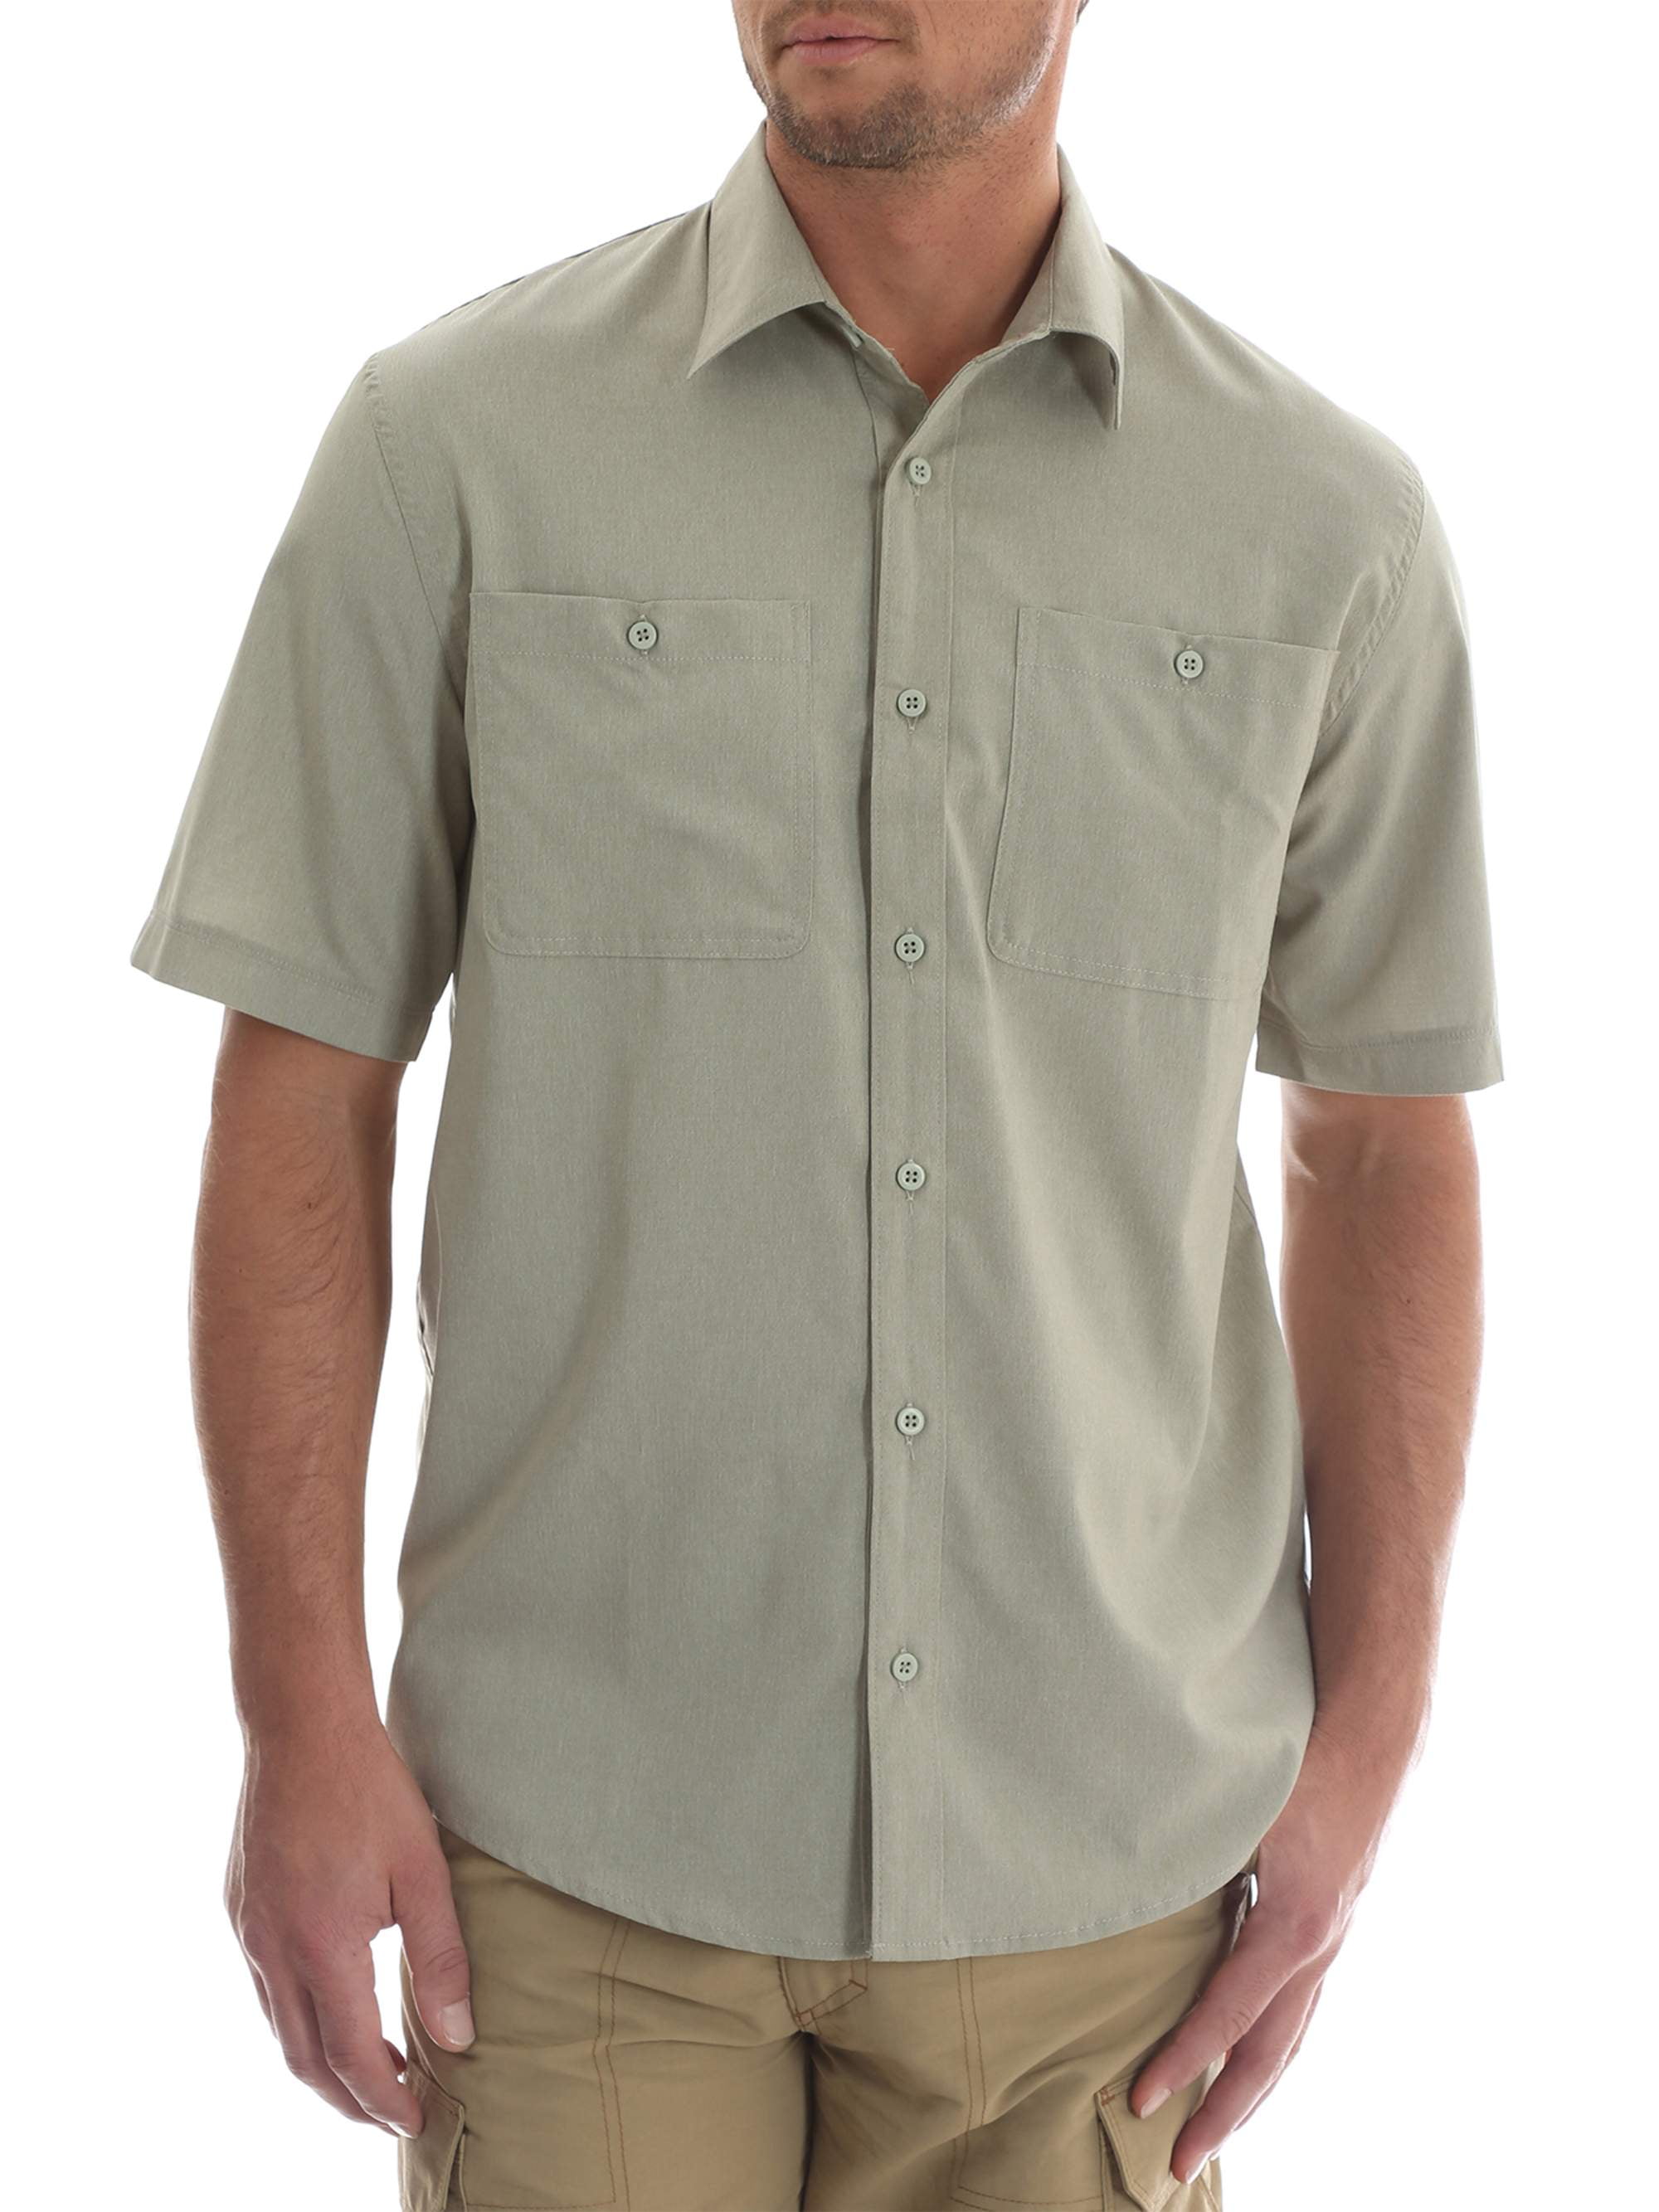 Big Men's Short Sleeve Utility Shirt - Walmart.com